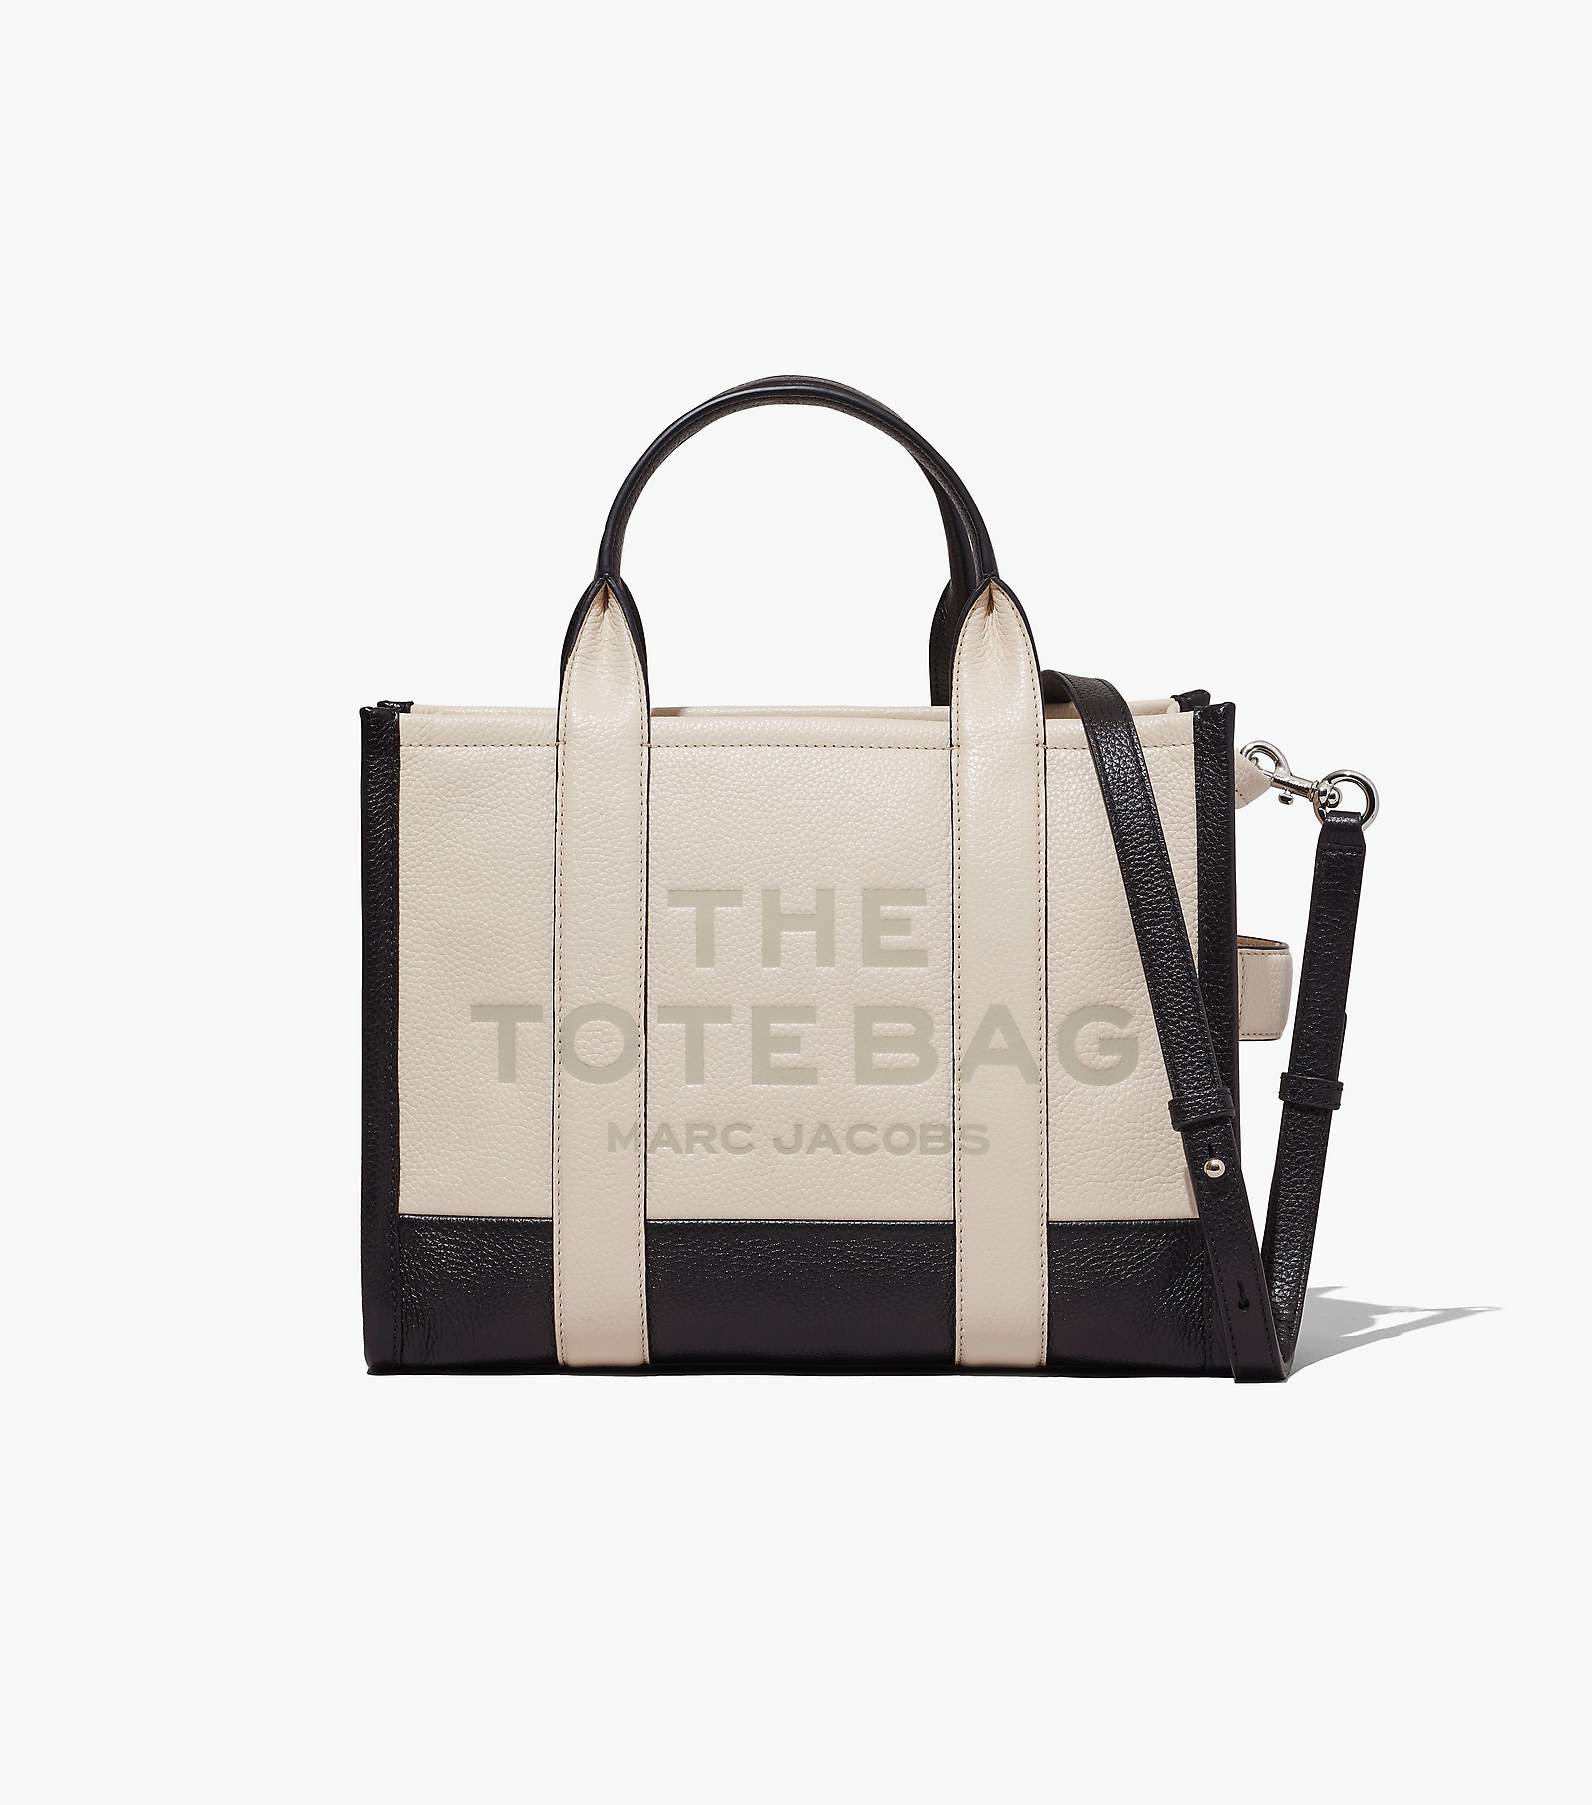 Marc Jacobs Women's The Clutch, Black, One Size: Handbags